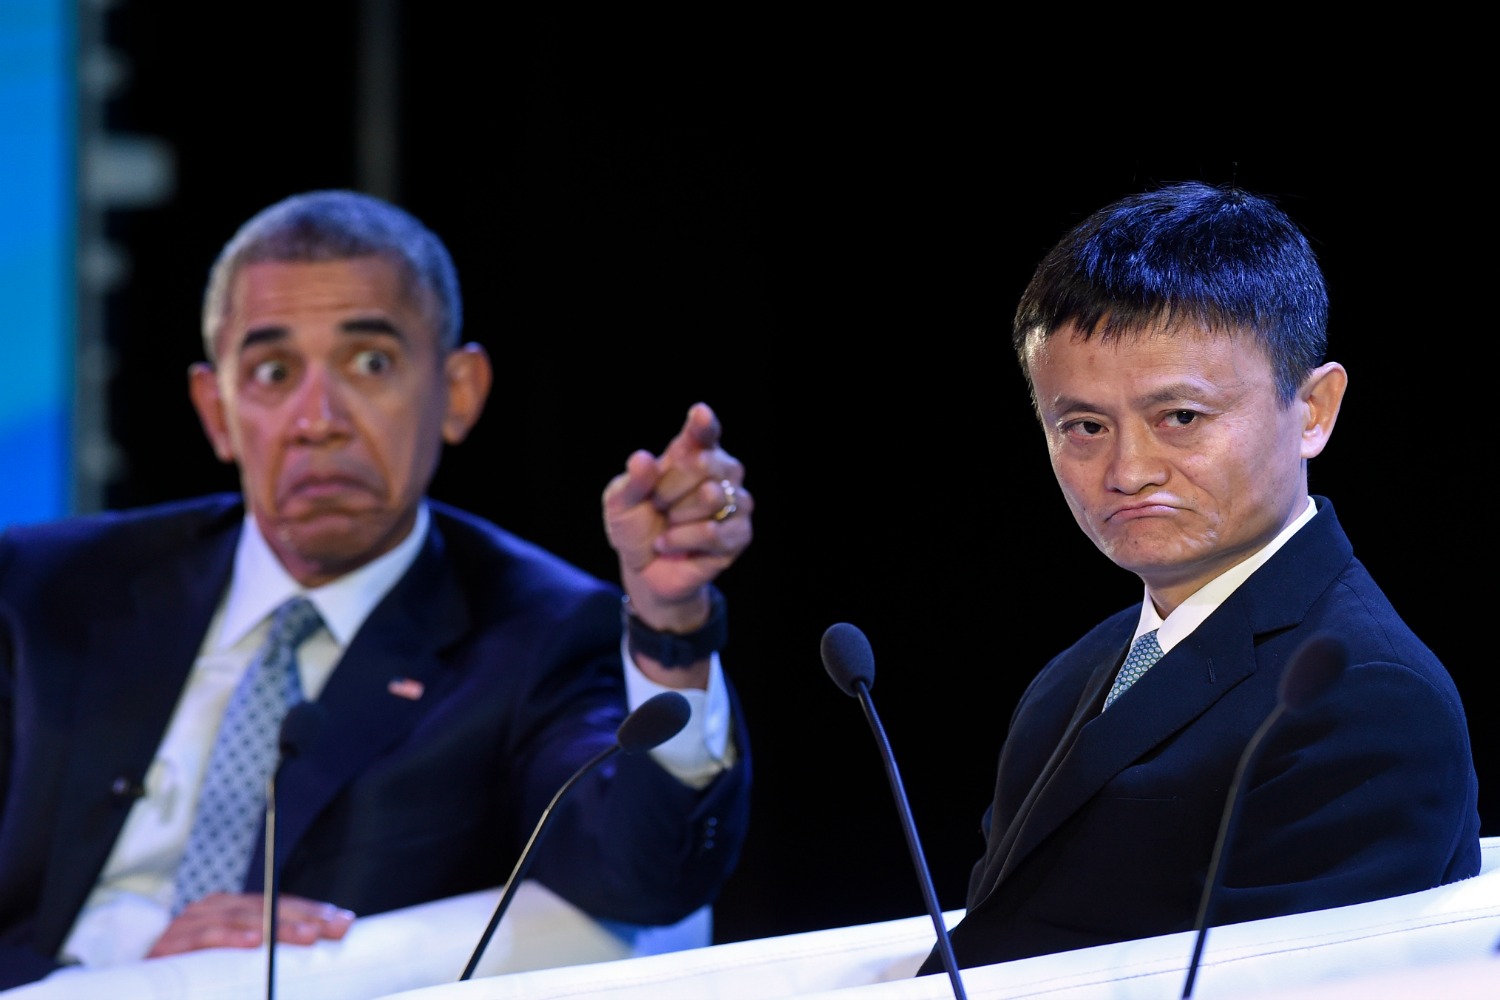 Obama interviews Alibaba founder